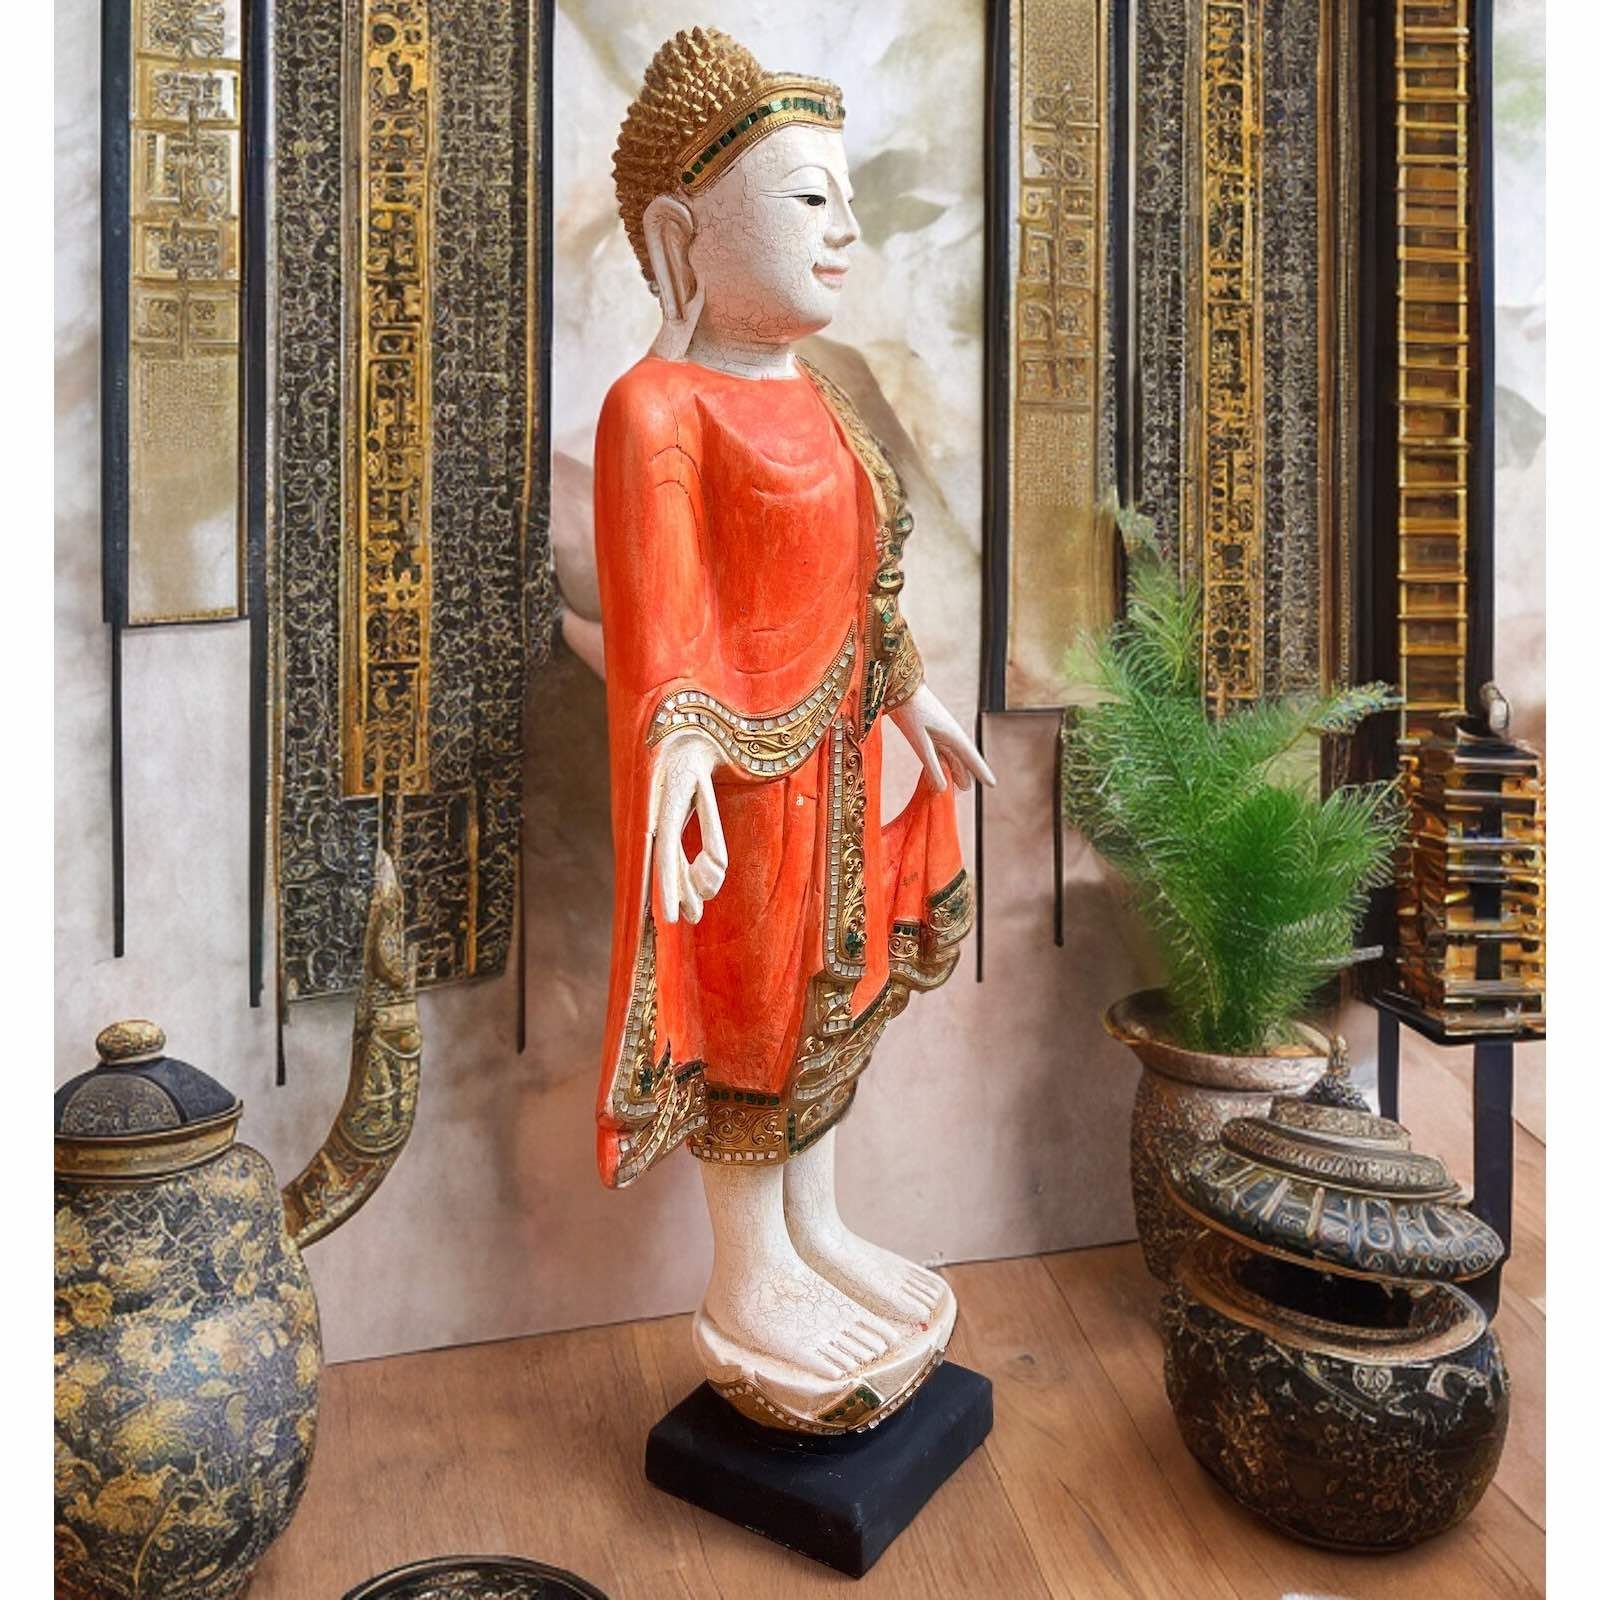 Asien LifeStyle Buddhafigur Holz Thailand Buddha Statue groß 80cm